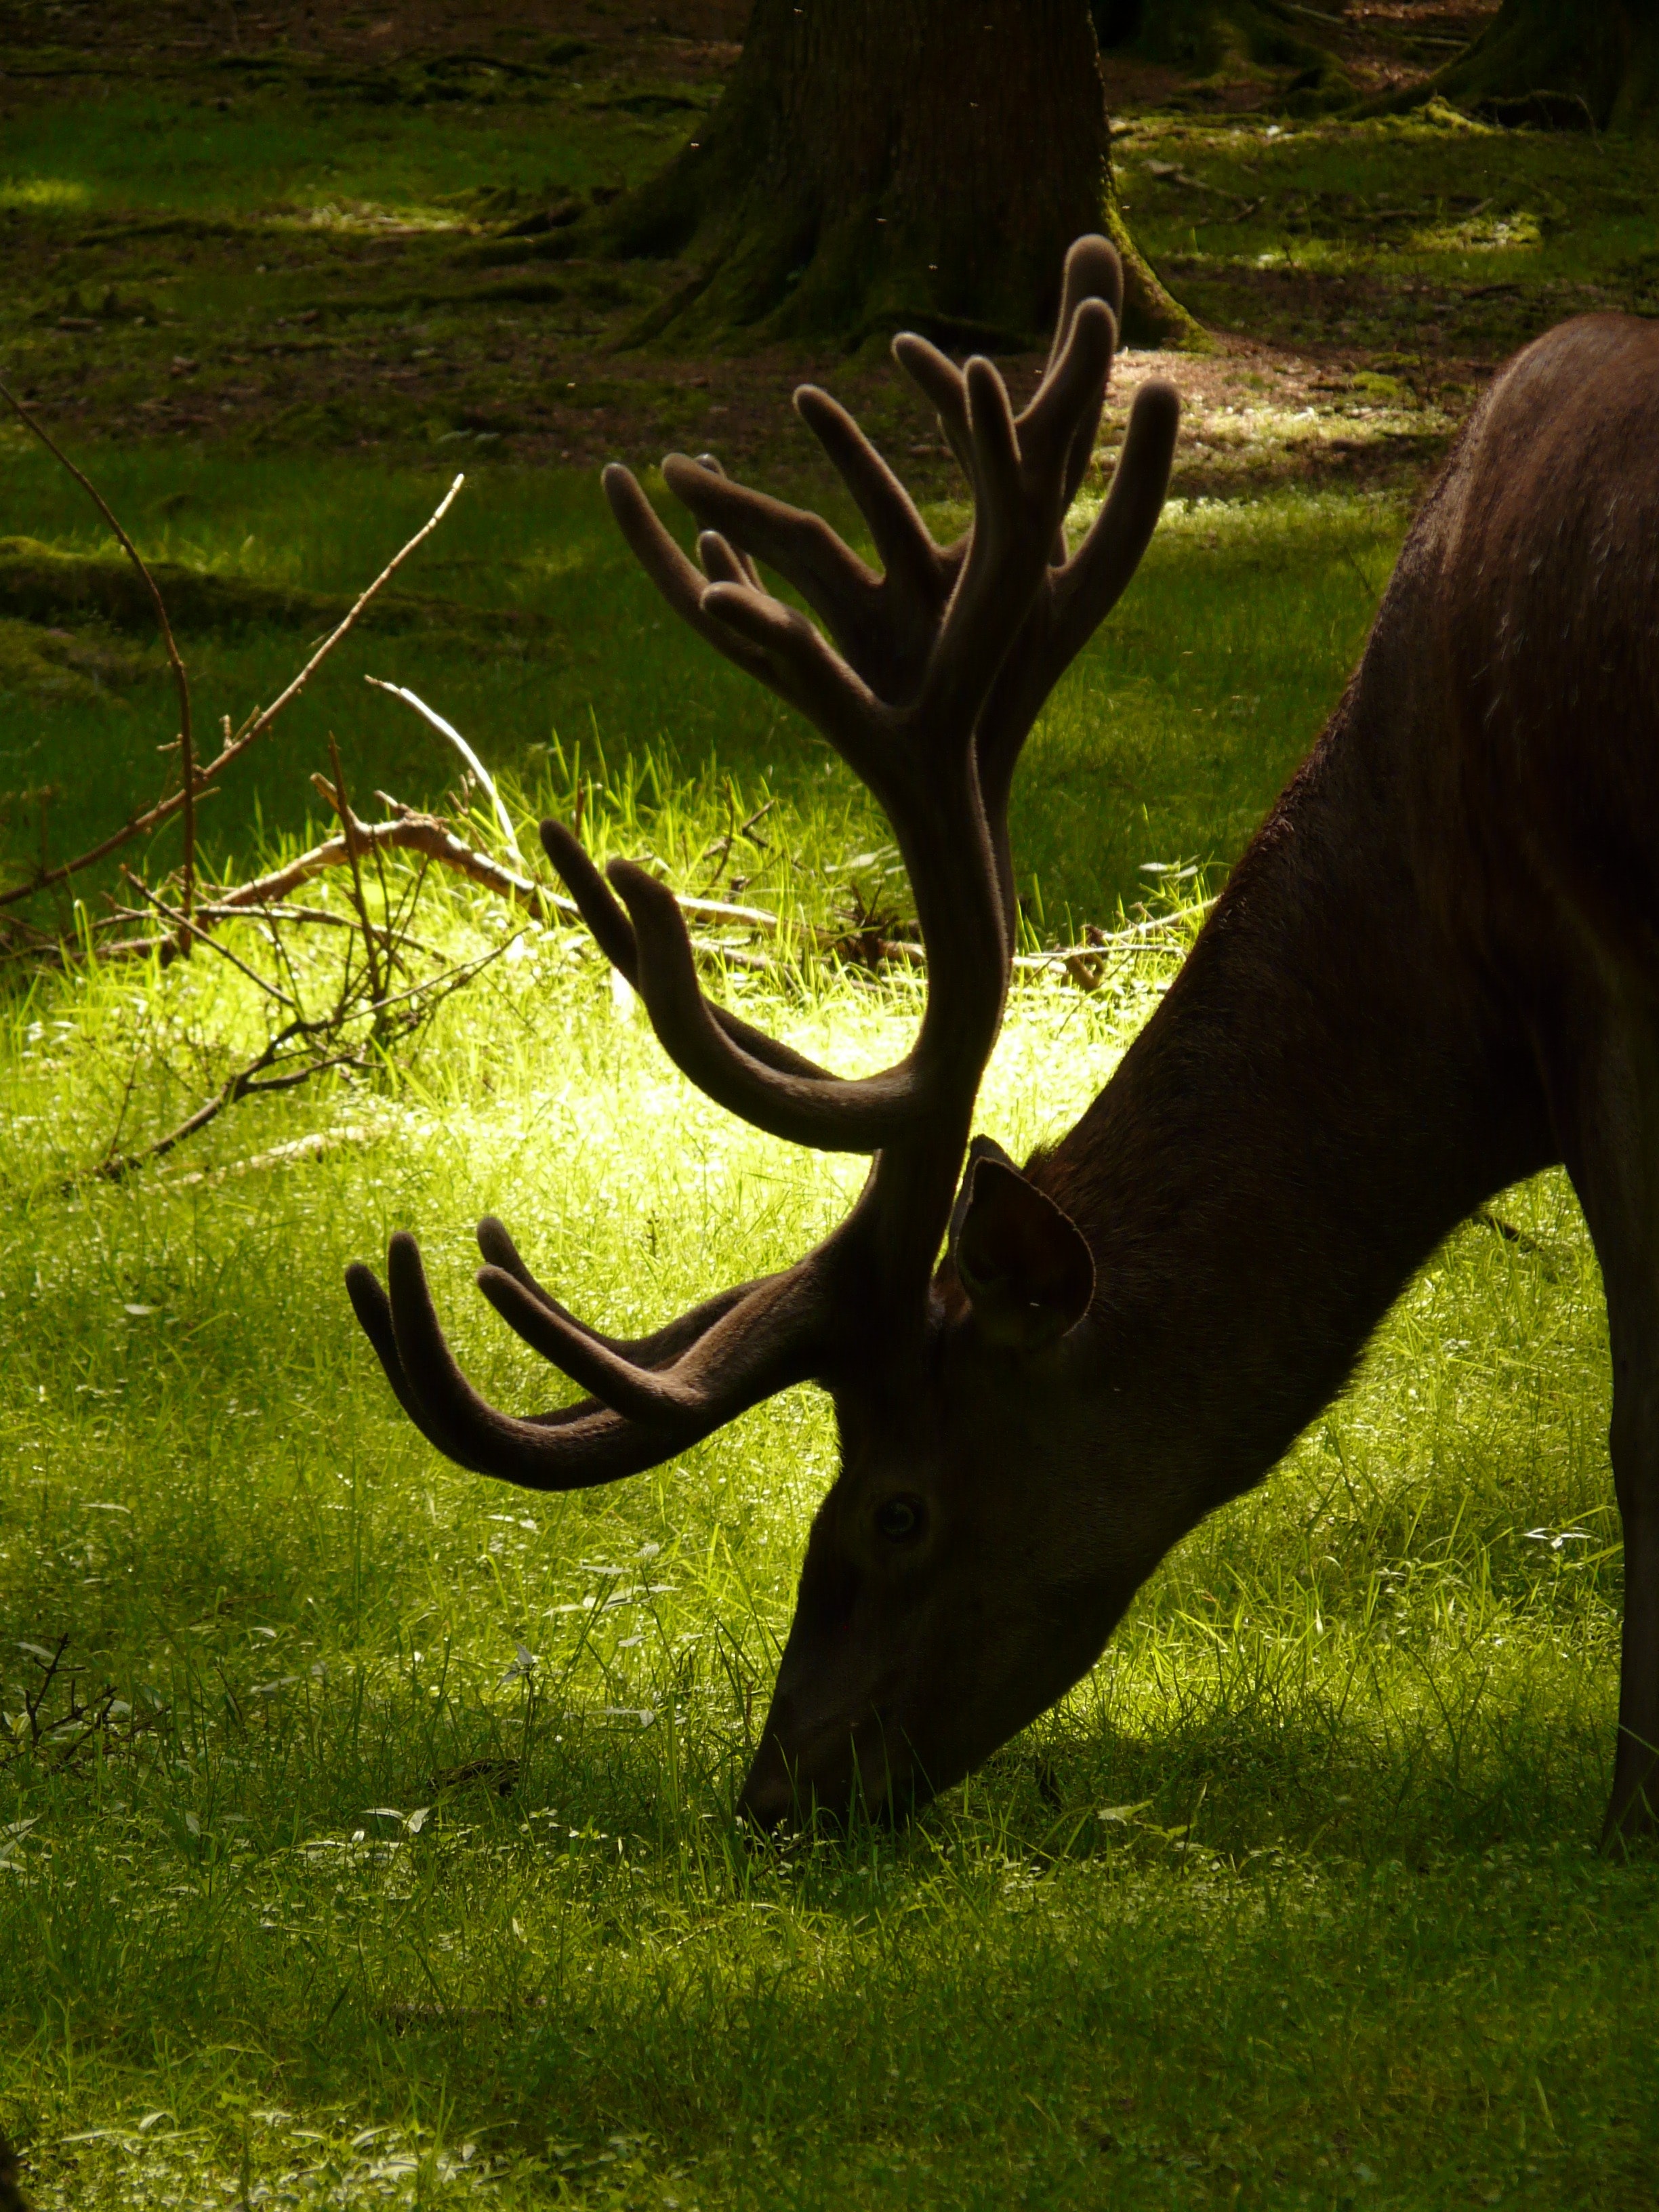 Deer eating grass during daytime photo